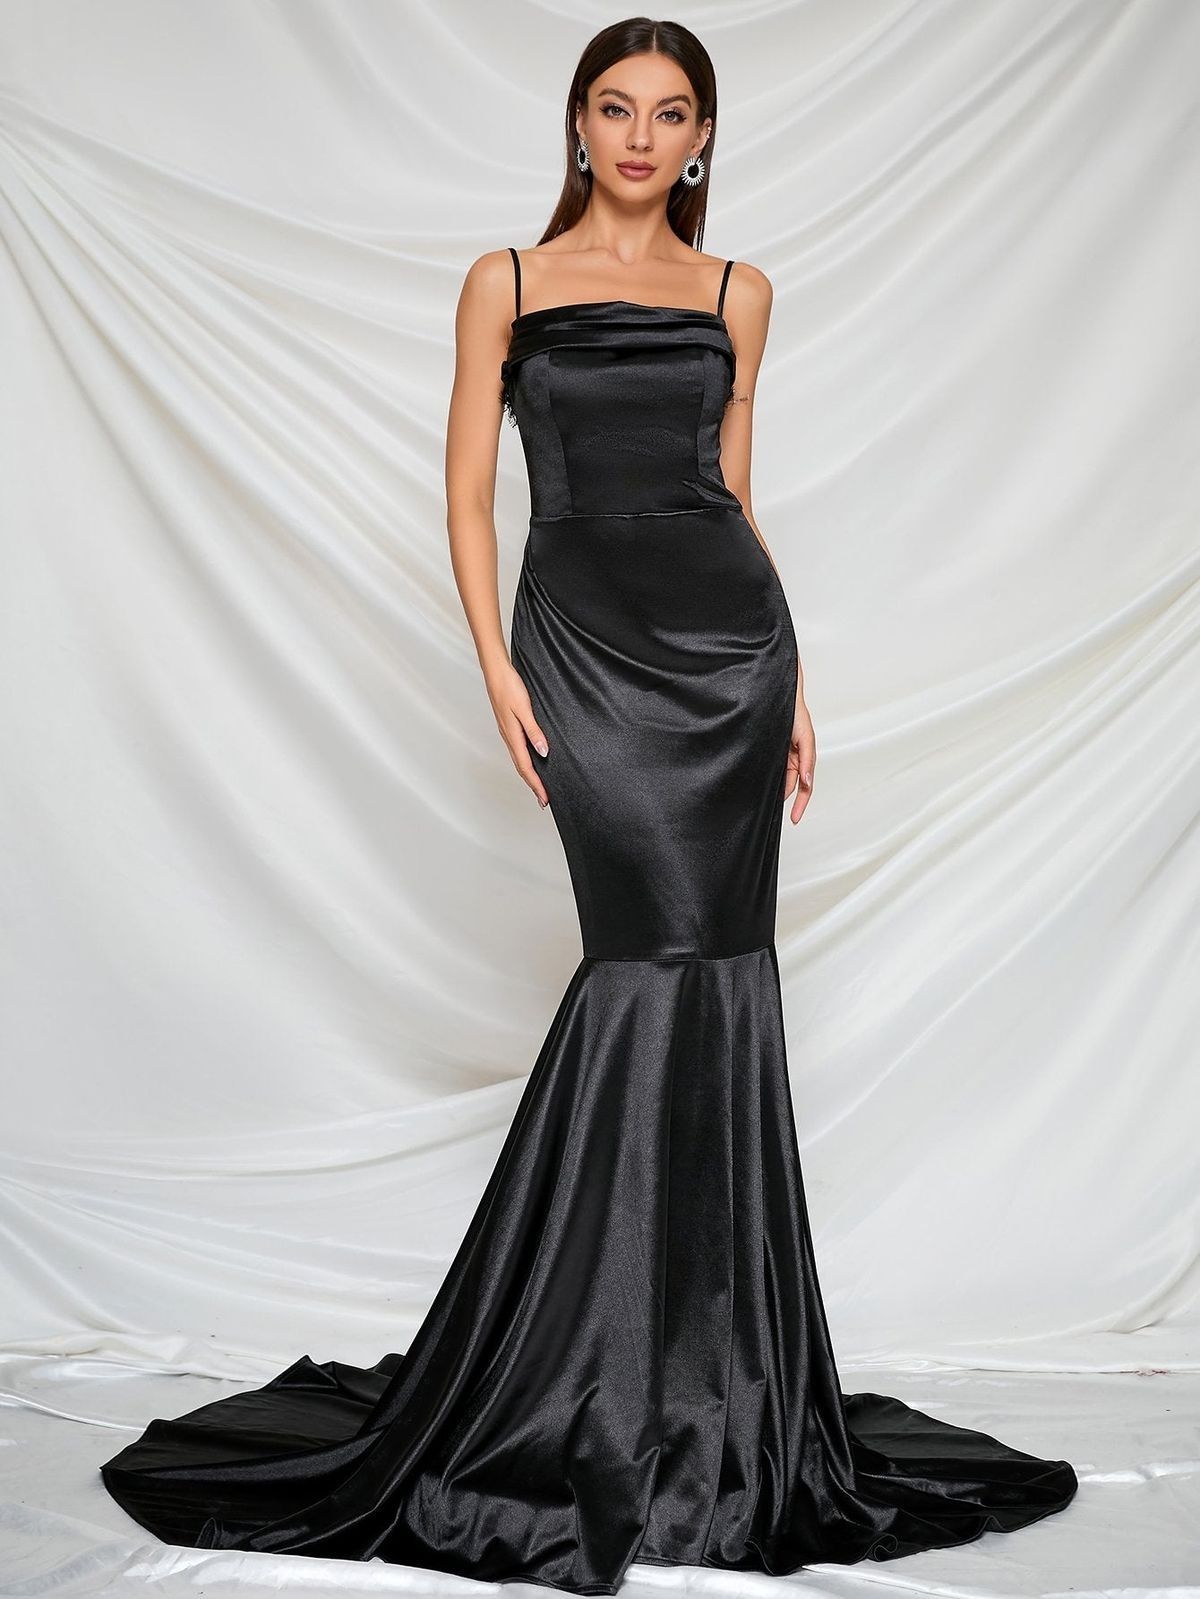 Amazon.com: Black Satin Dress